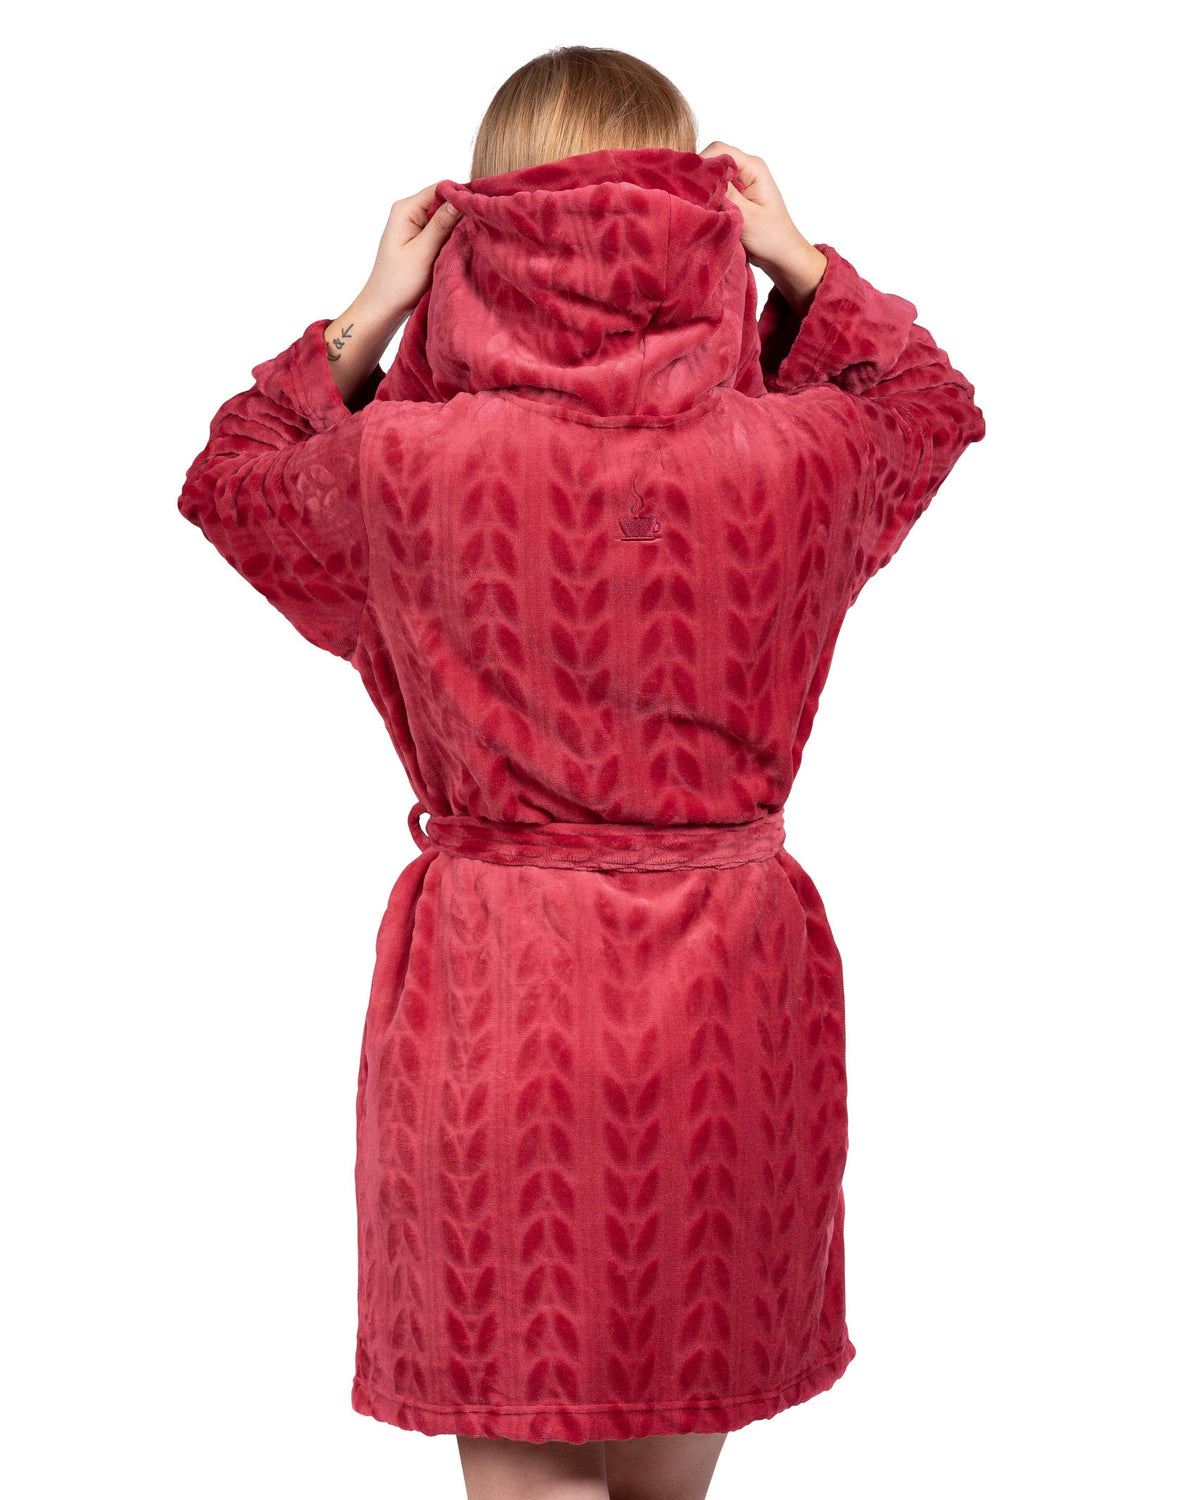 Spa-Day Hooded Plush Robe - Deep Red - LATTELOVE Co.